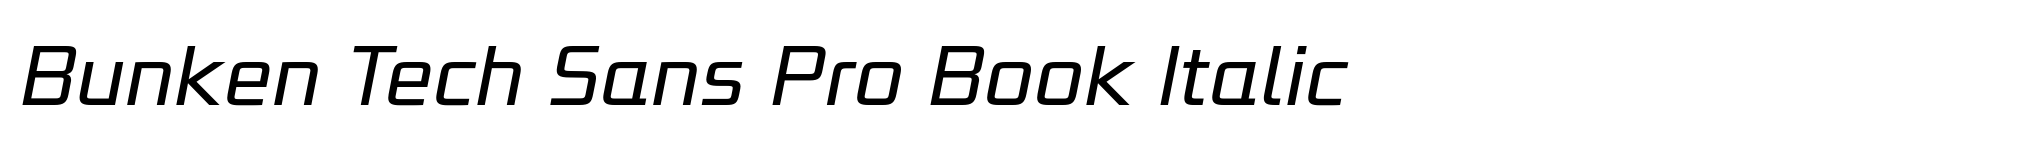 Bunken Tech Sans Pro Book Italic image